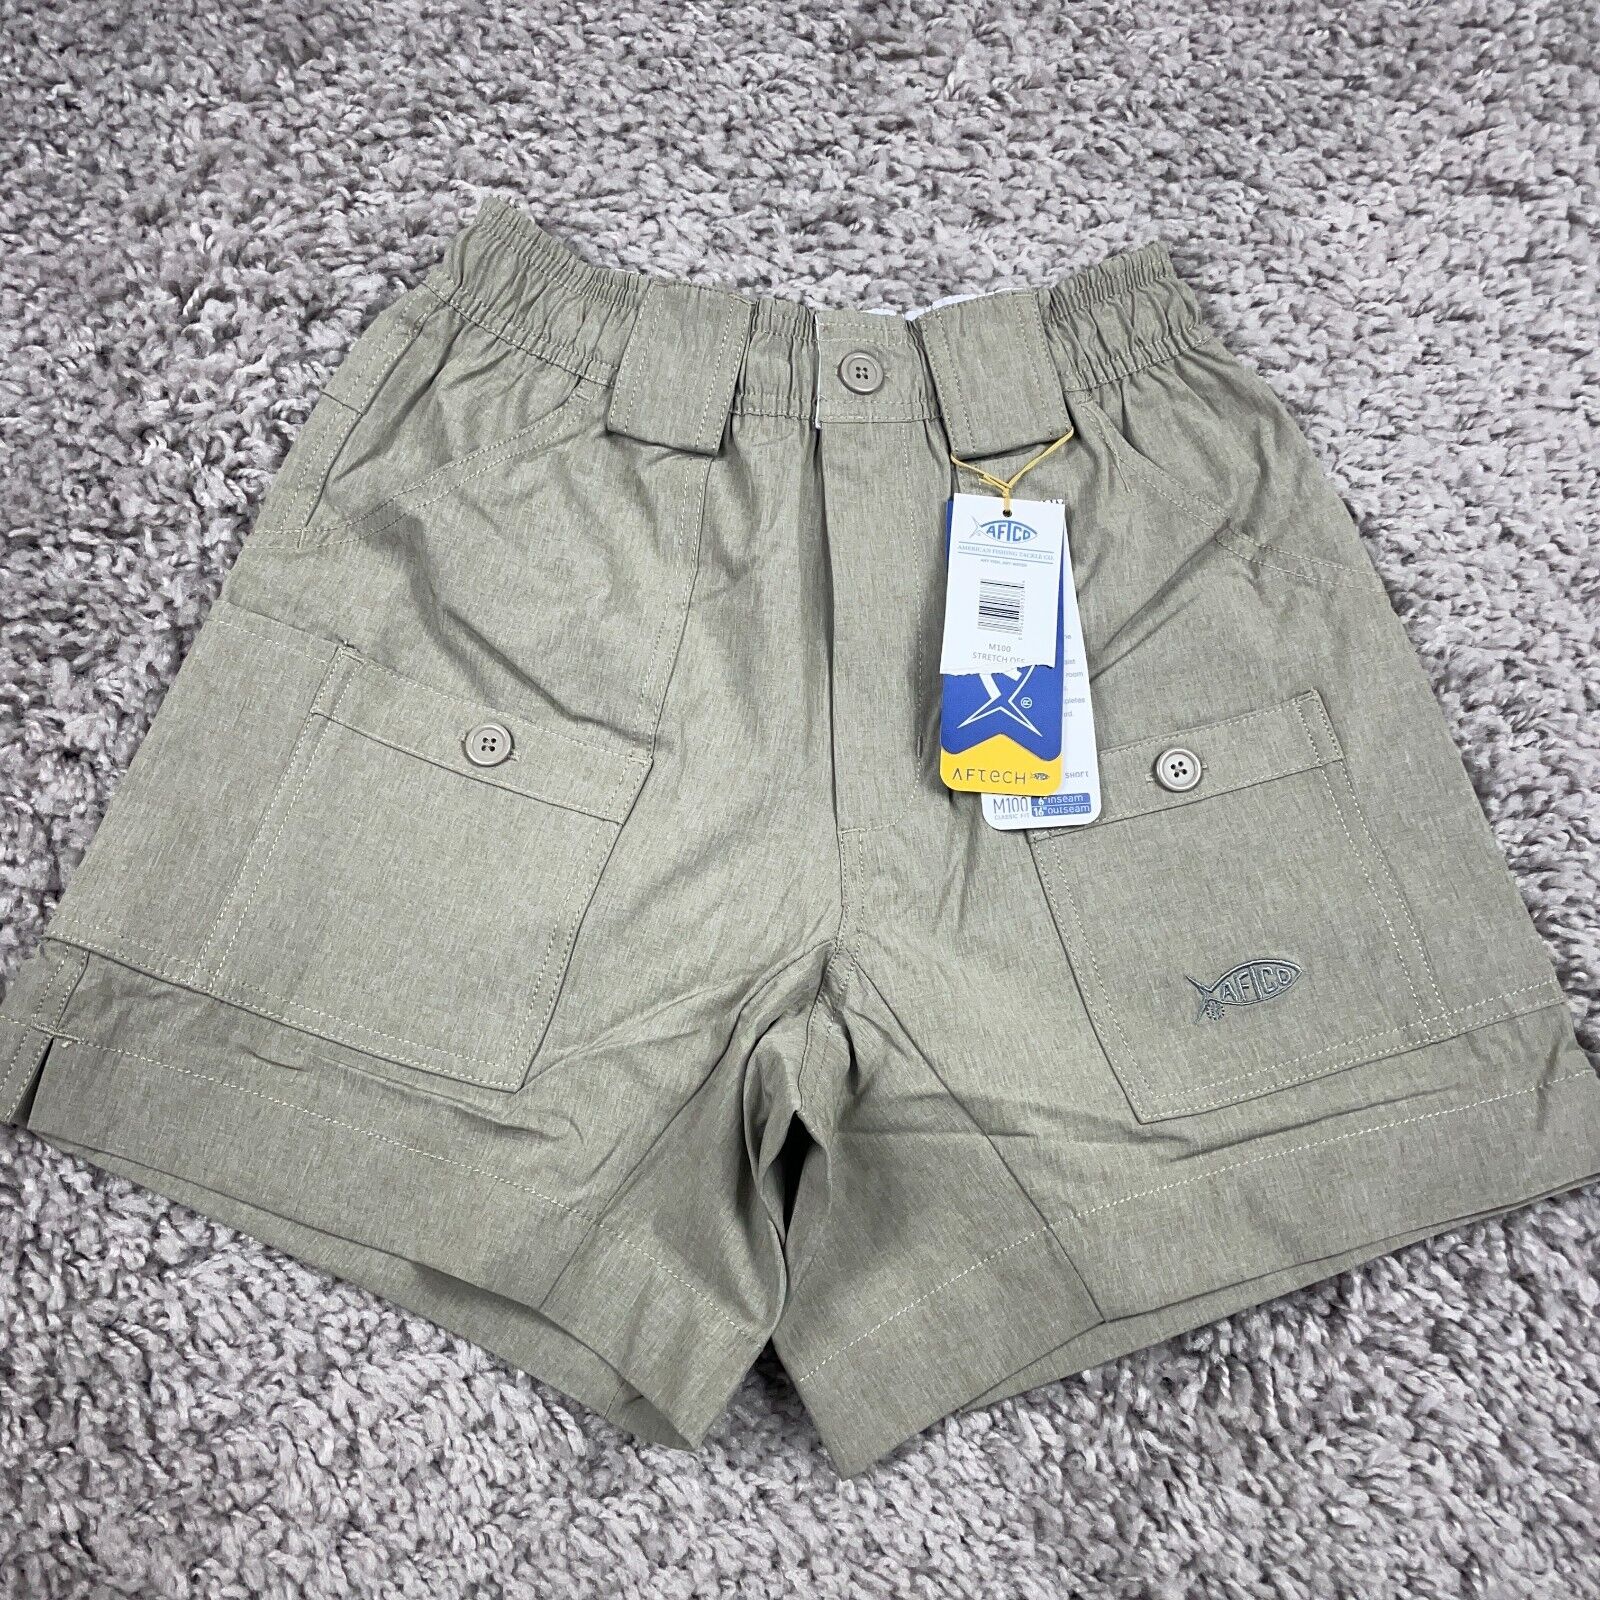 AFTCO M100 Shorts Mens Size 28 Tan Fishing Cargo Pockets Cordura DWR UPF NWT $59